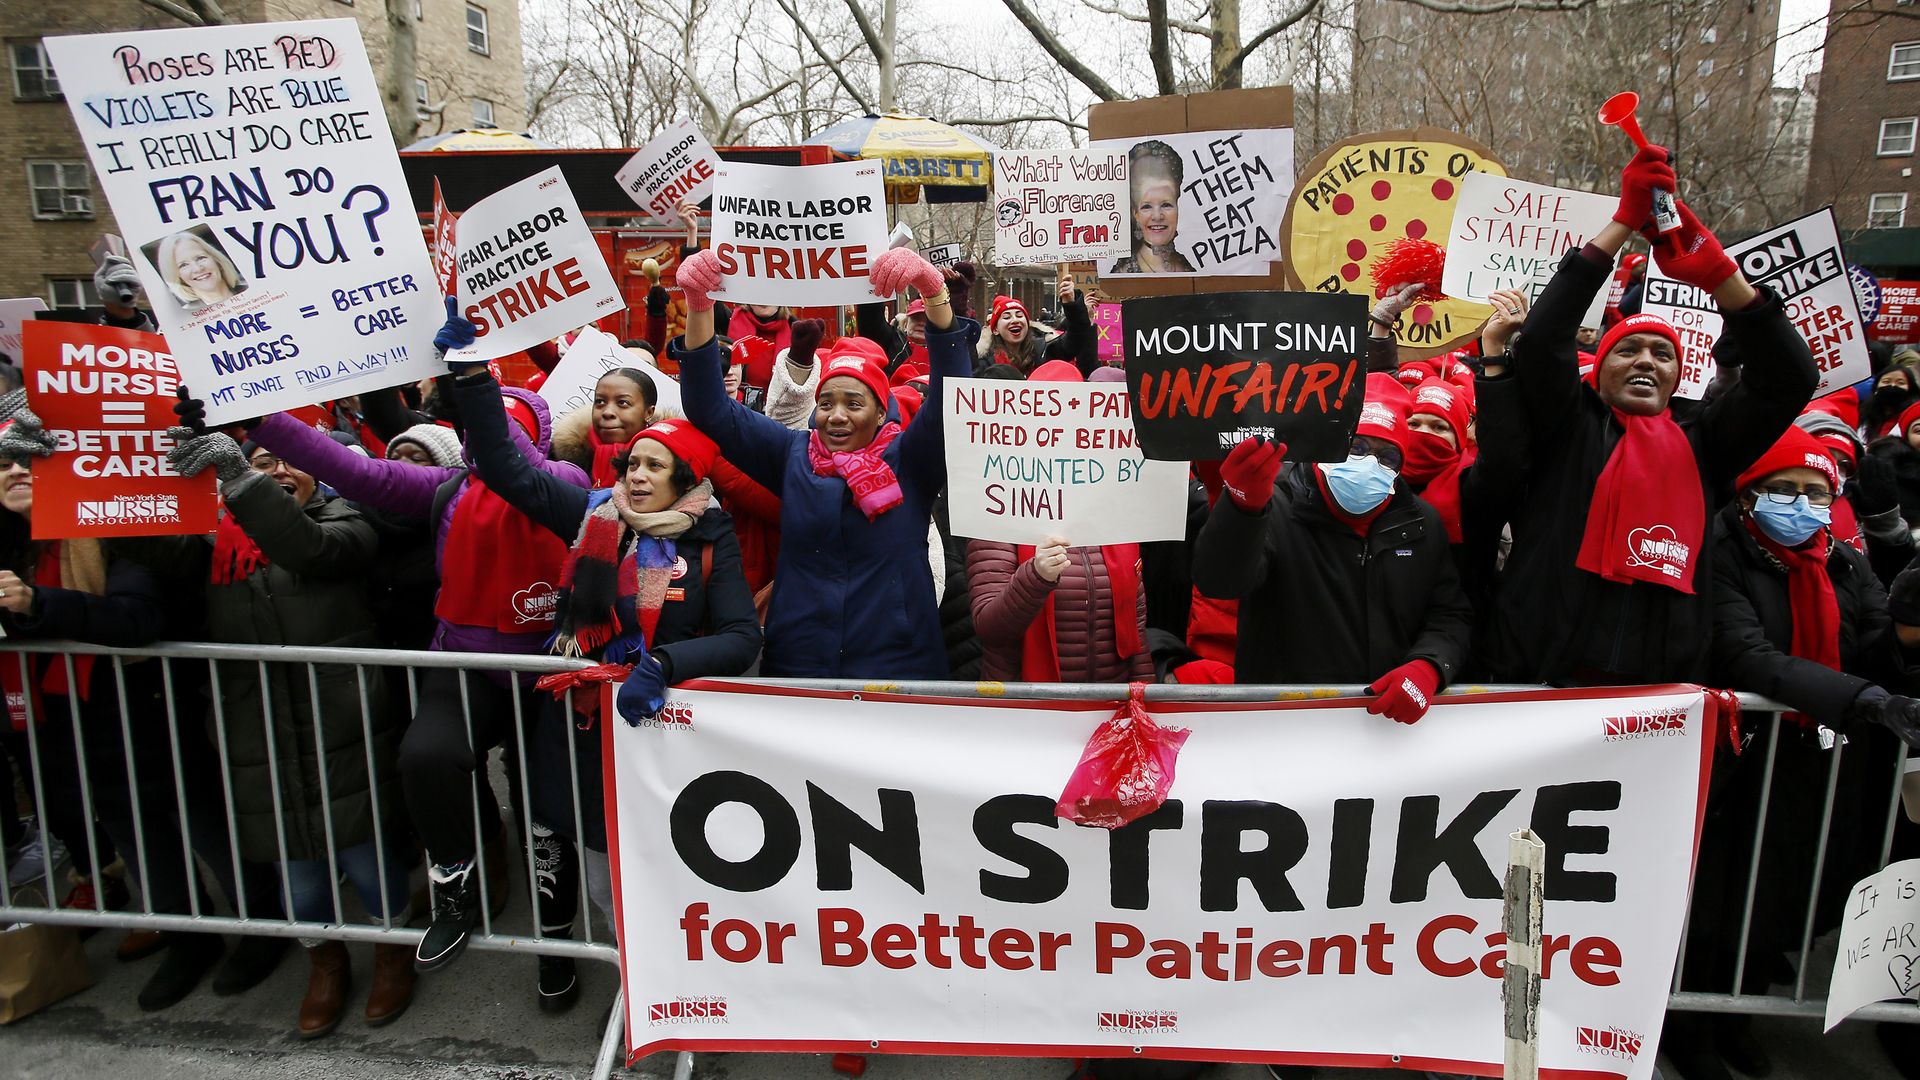 Nurses shout slogans outside Mount Sinai Hospital in Manhattan on Wednesday. Photo: Leonardo Munoz/VIEWpress via Getty Images